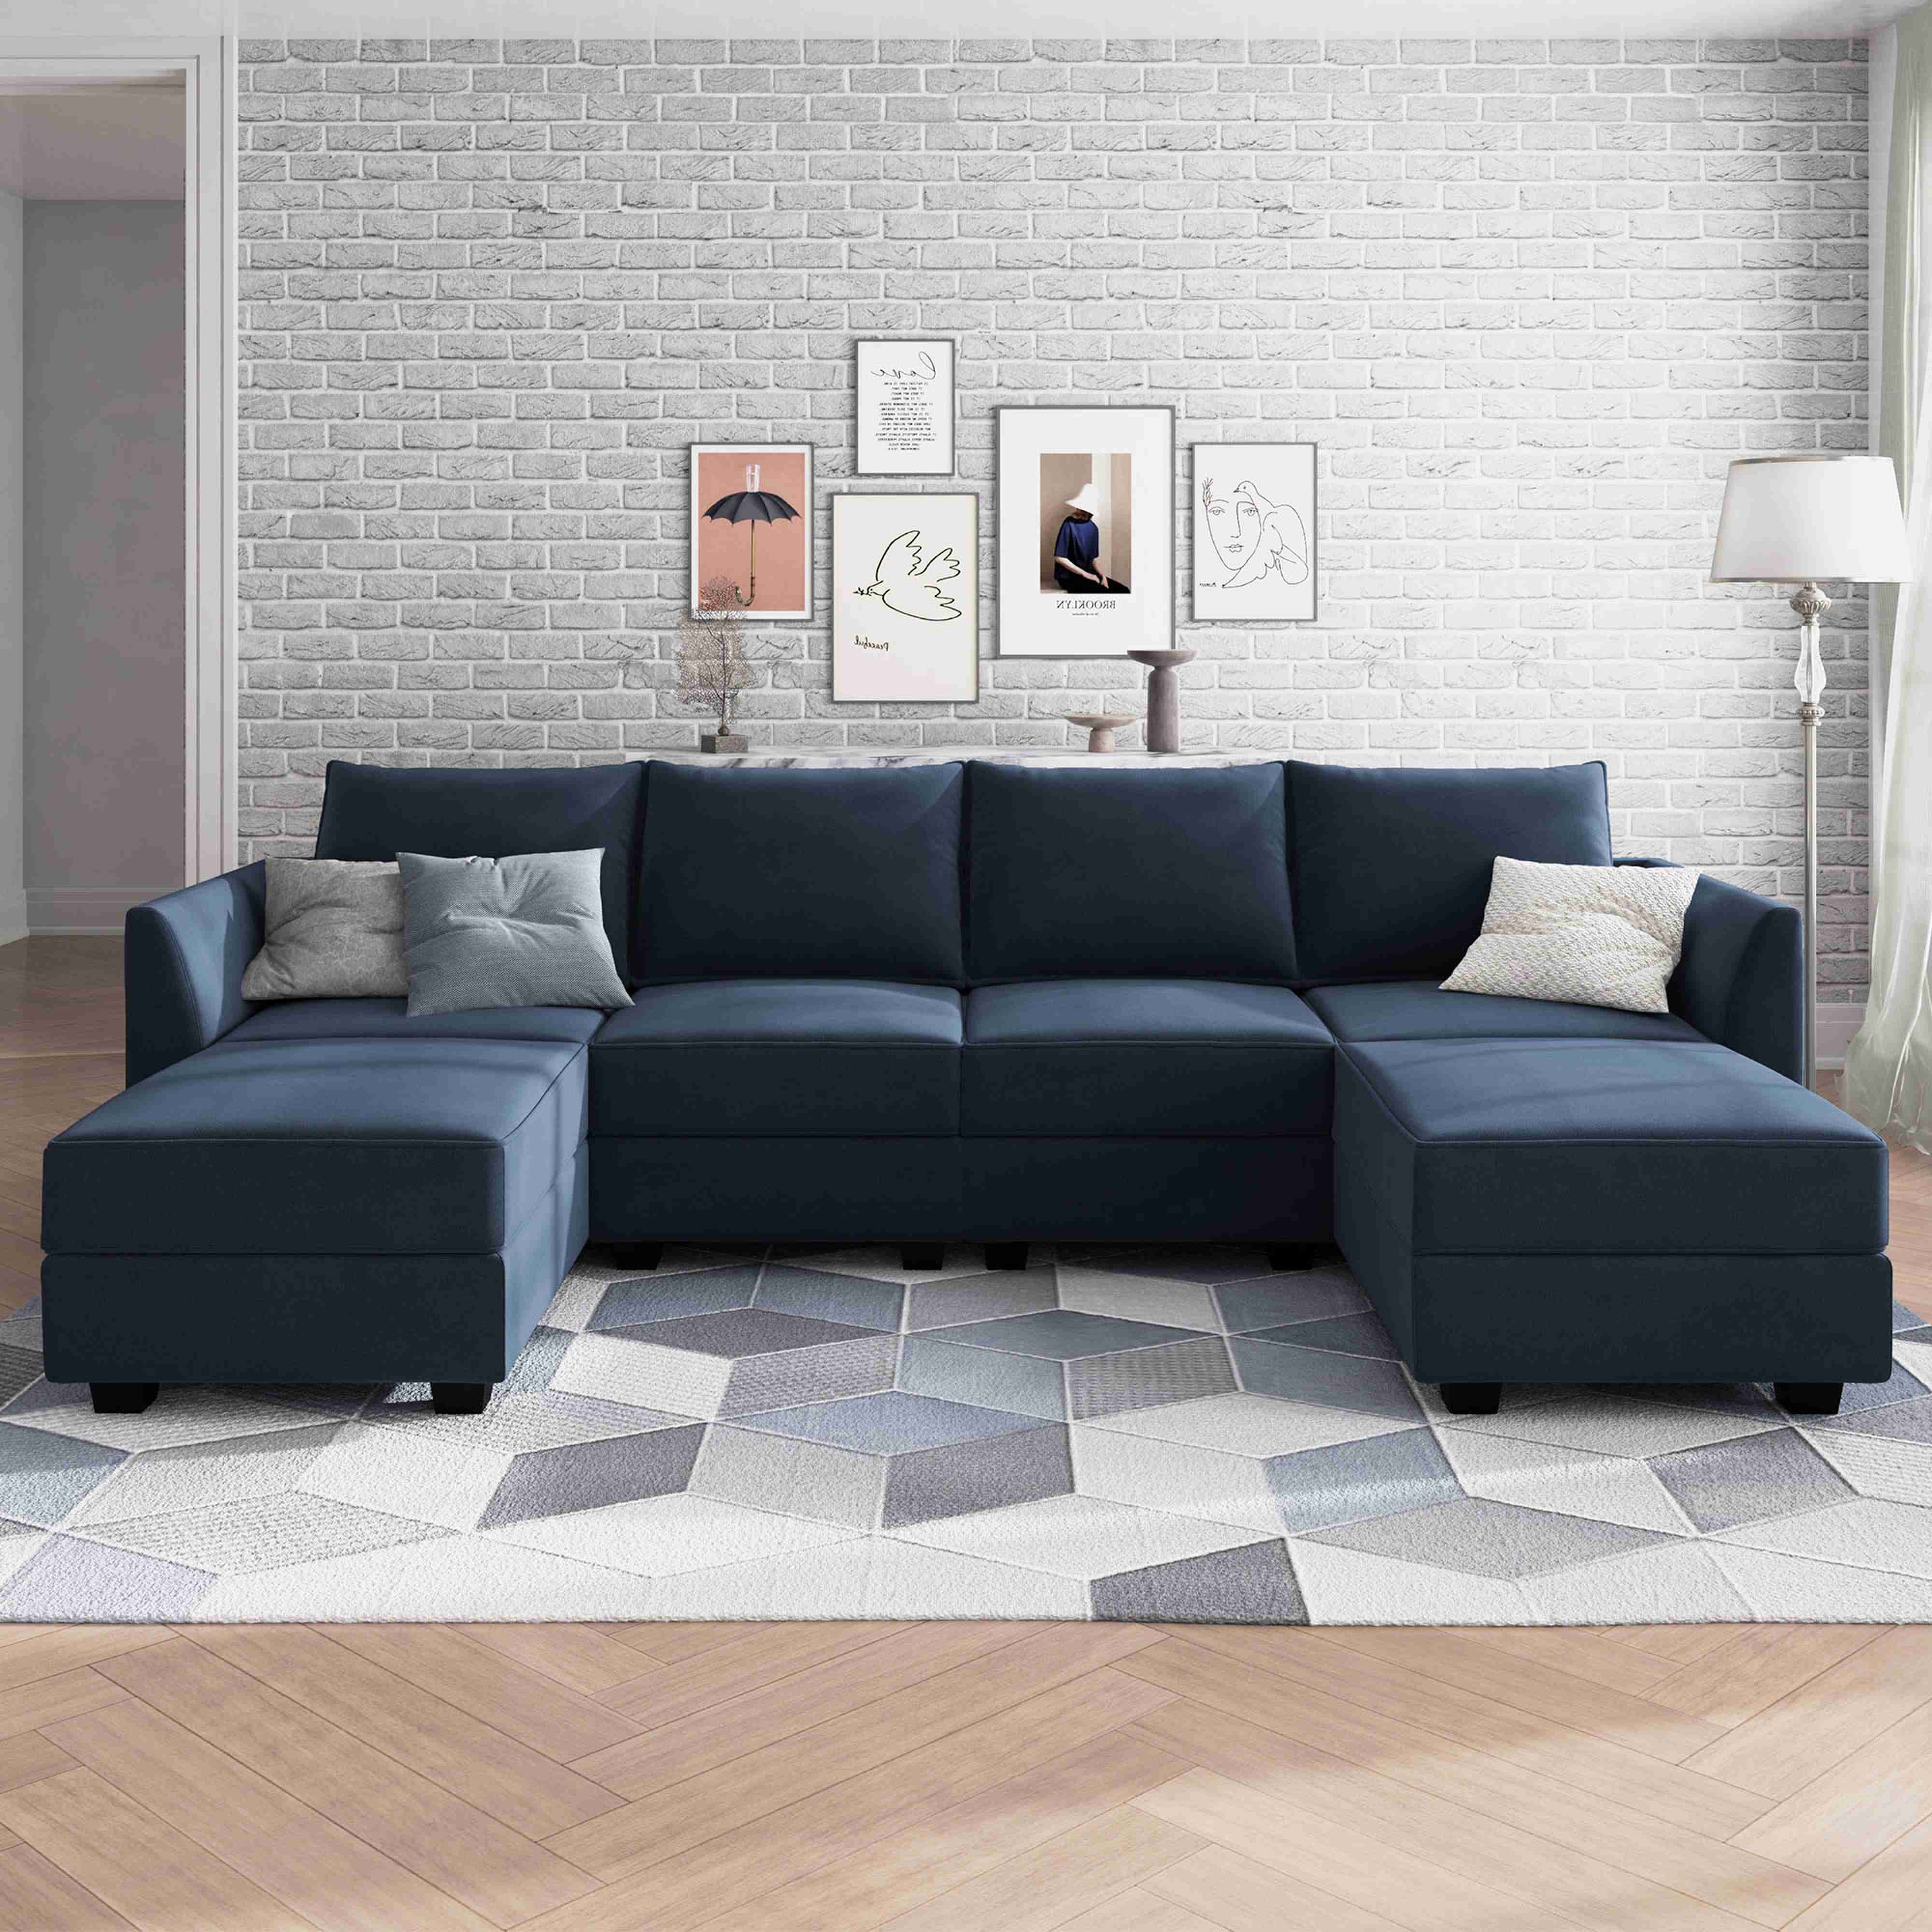 Honbay Velvet Upholstered Modular Sectional Sleeper Sofa With Storage  Ottomans, Free Combination Sofa For Living Room, Navy Blue – Walmart In Upholstered Modular Couches With Storage (Gallery 17 of 20)